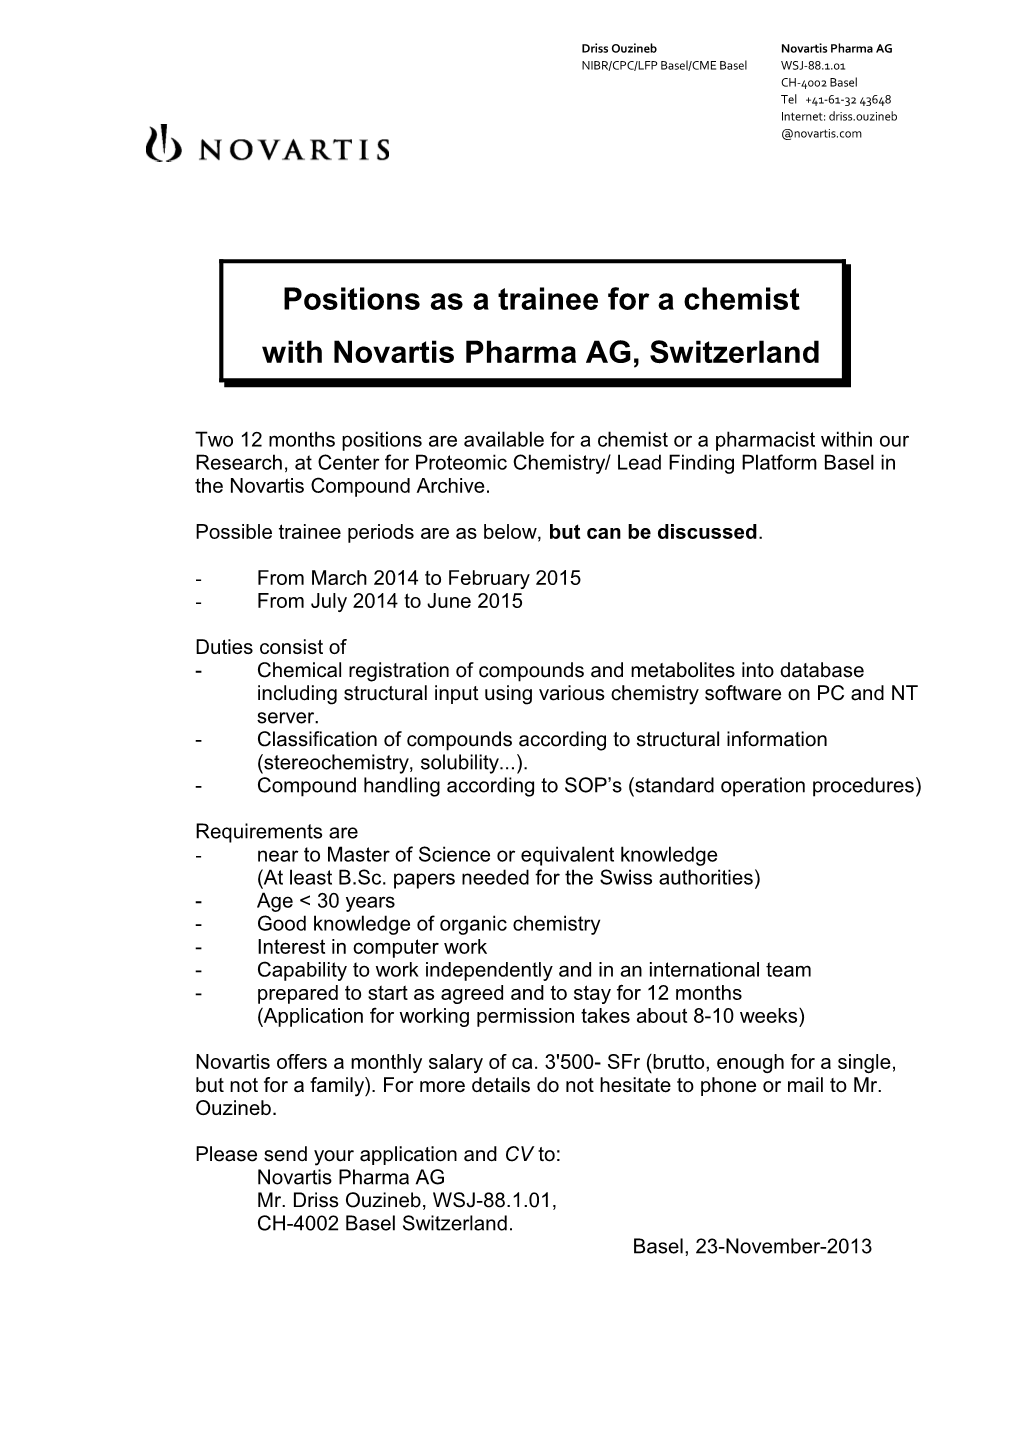 Position As a Trainee for a Chemist